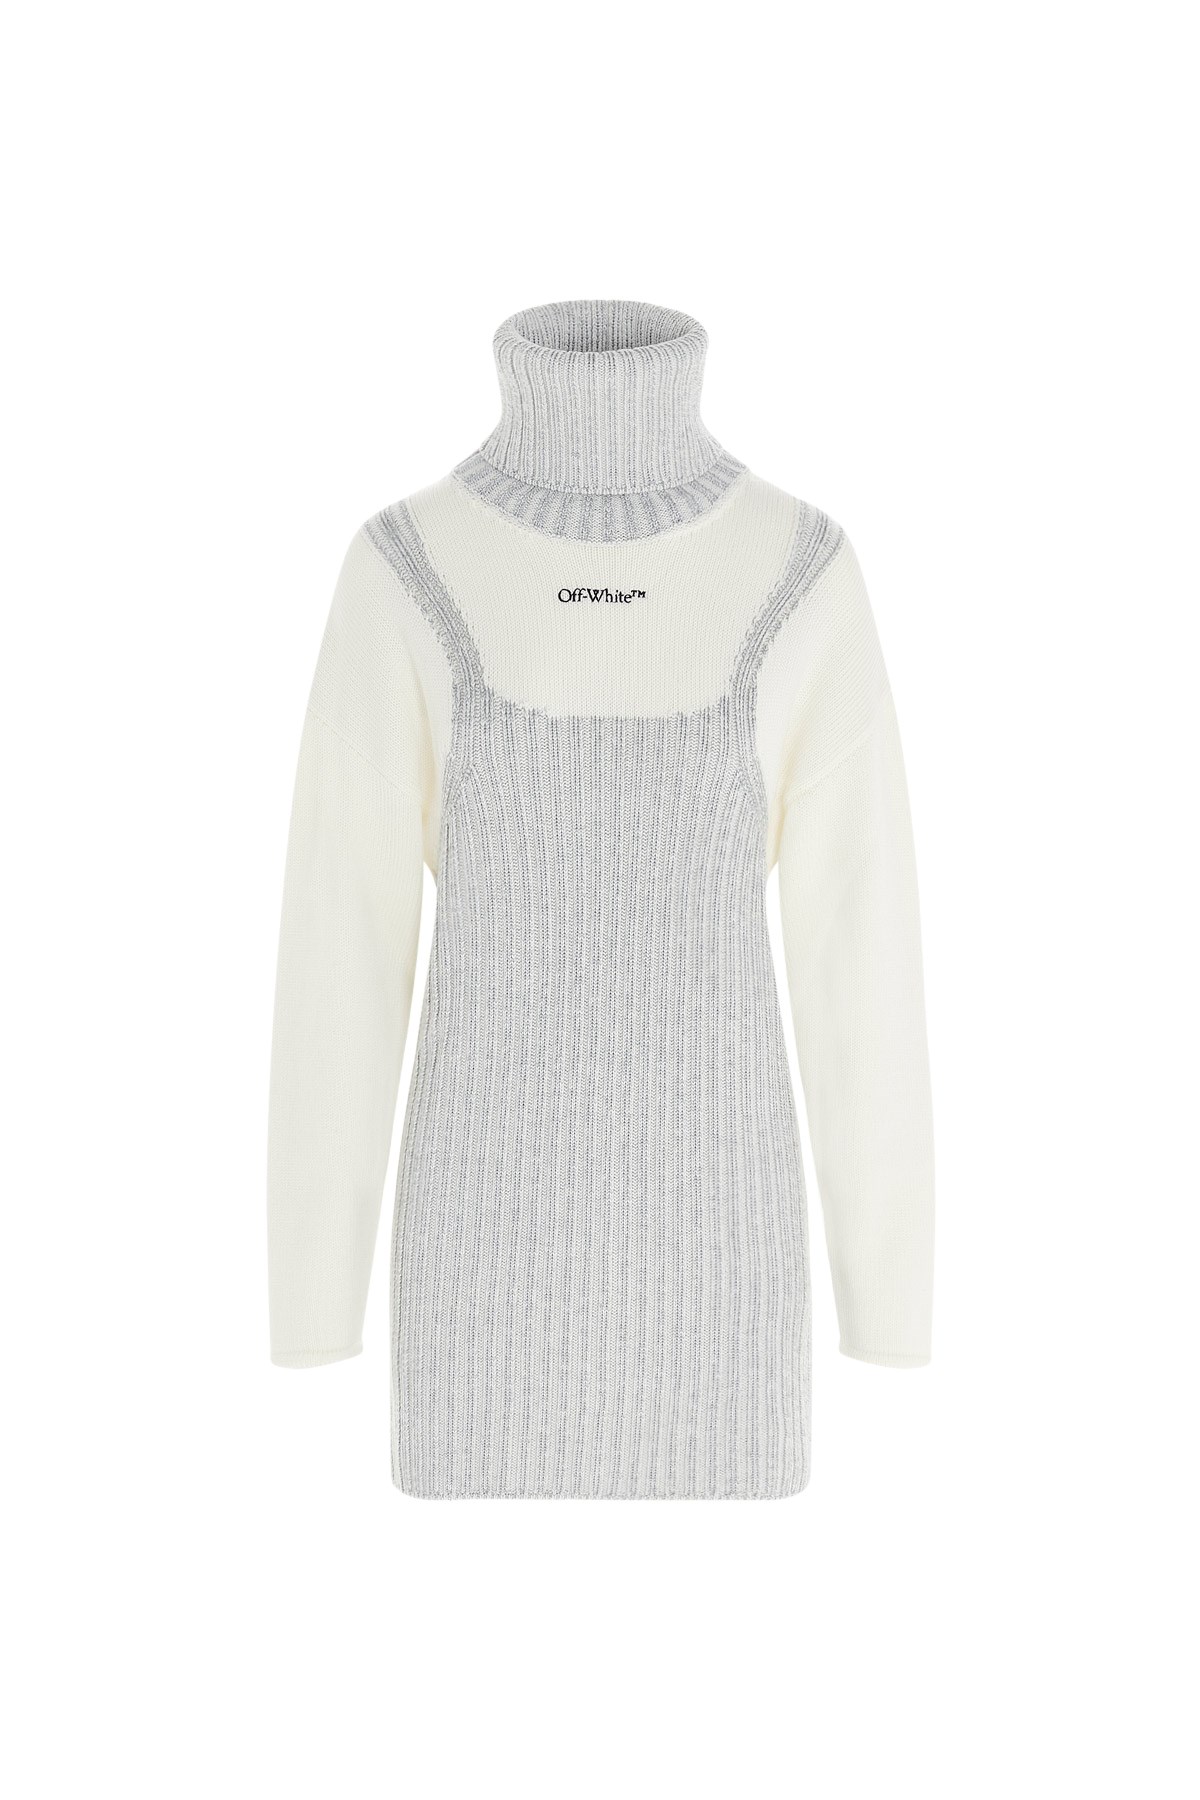 OFF-WHITE 'Trompe L'oeil' Wool Sweater